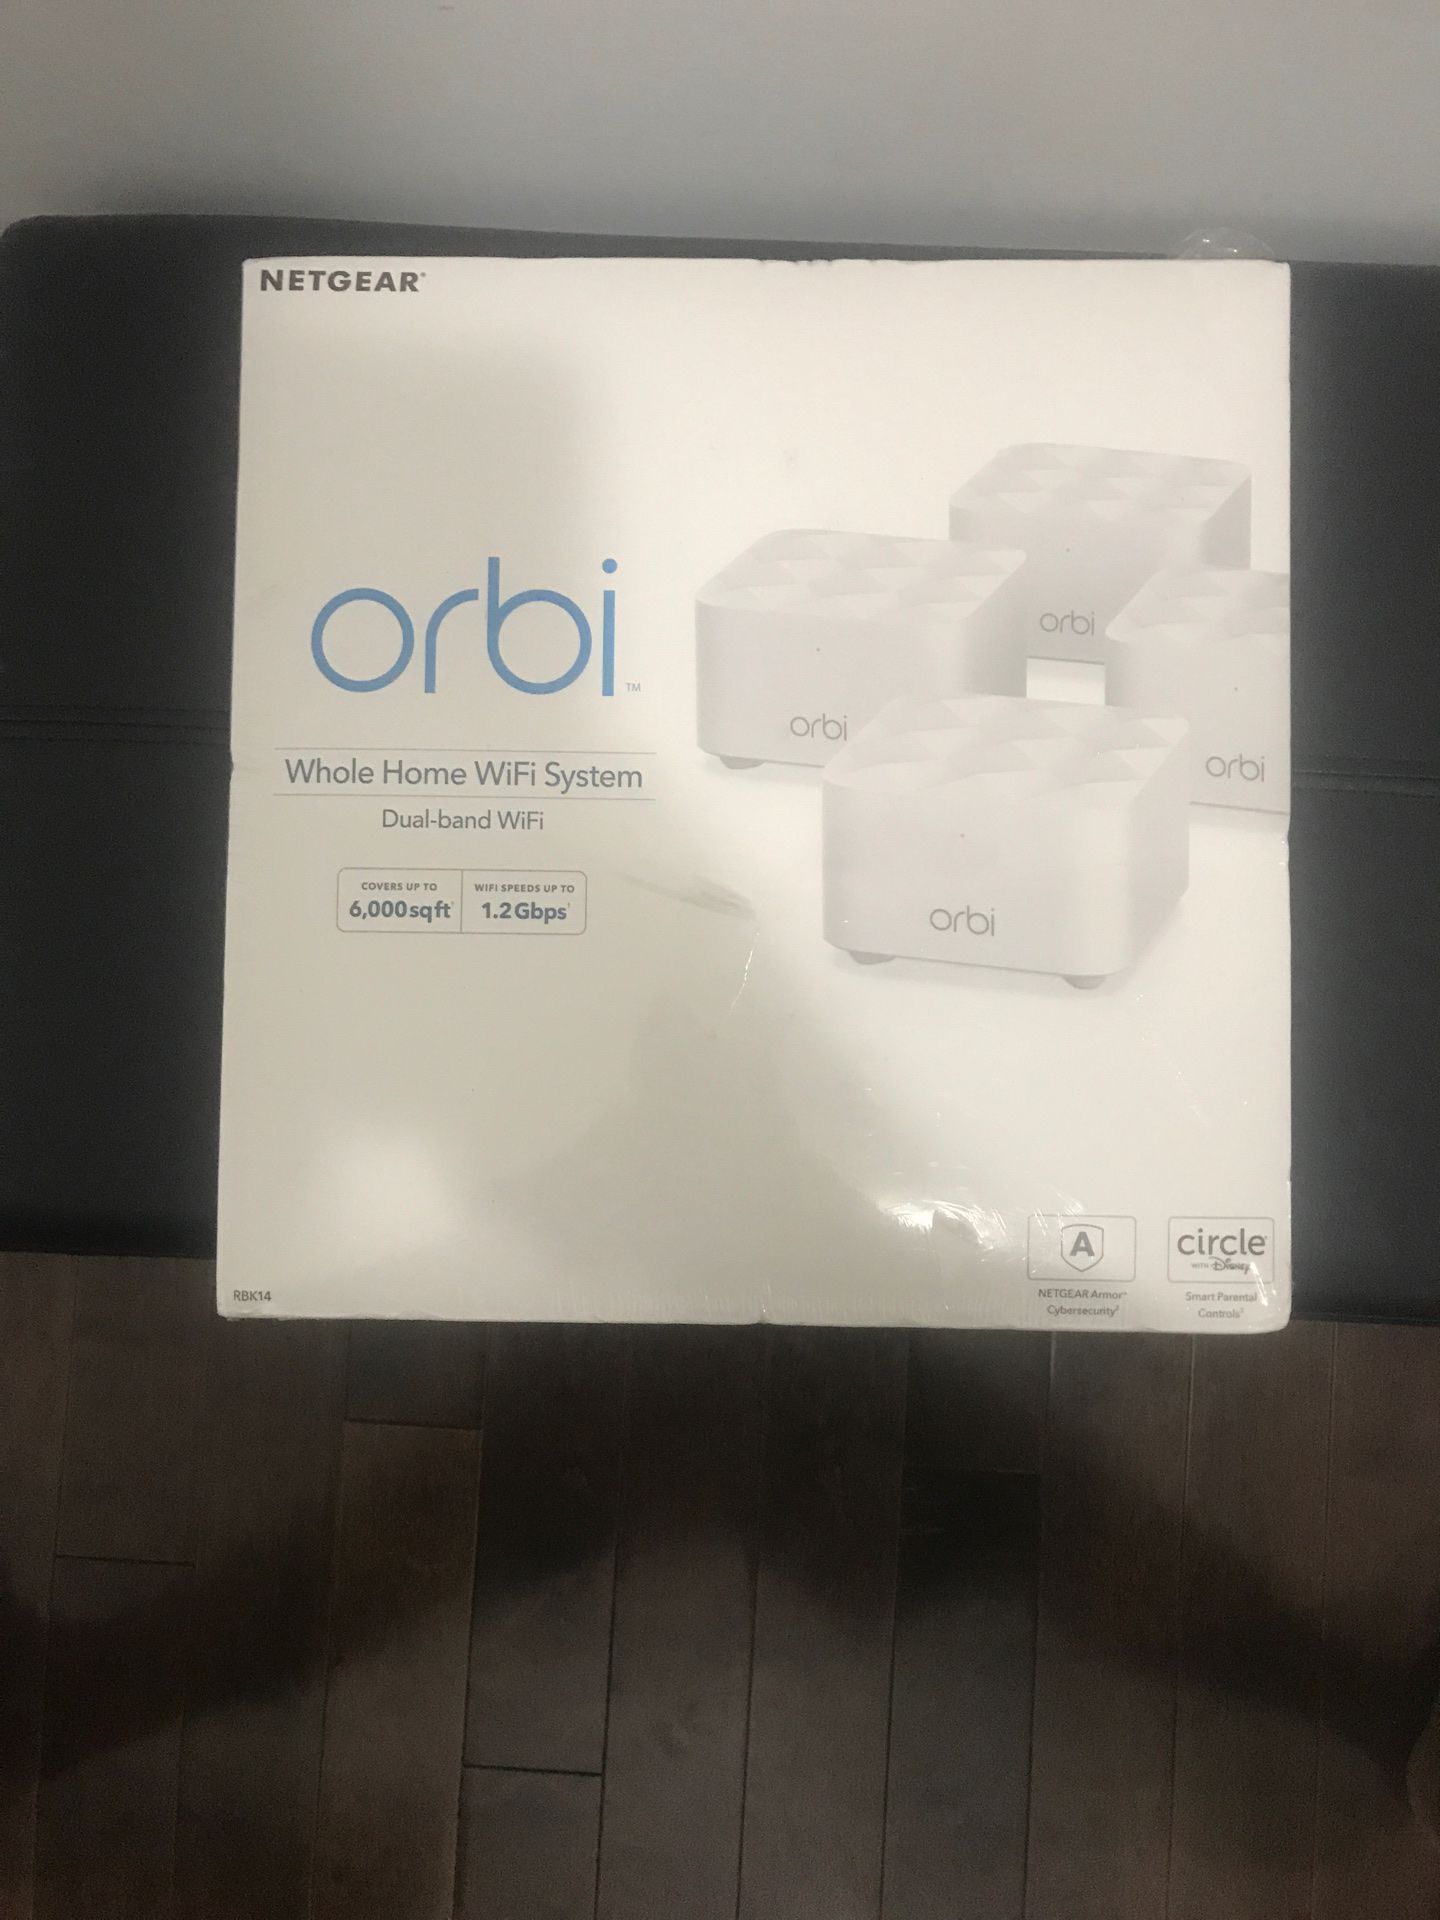 ORBI whole home WiFi system - Dual band WiFi